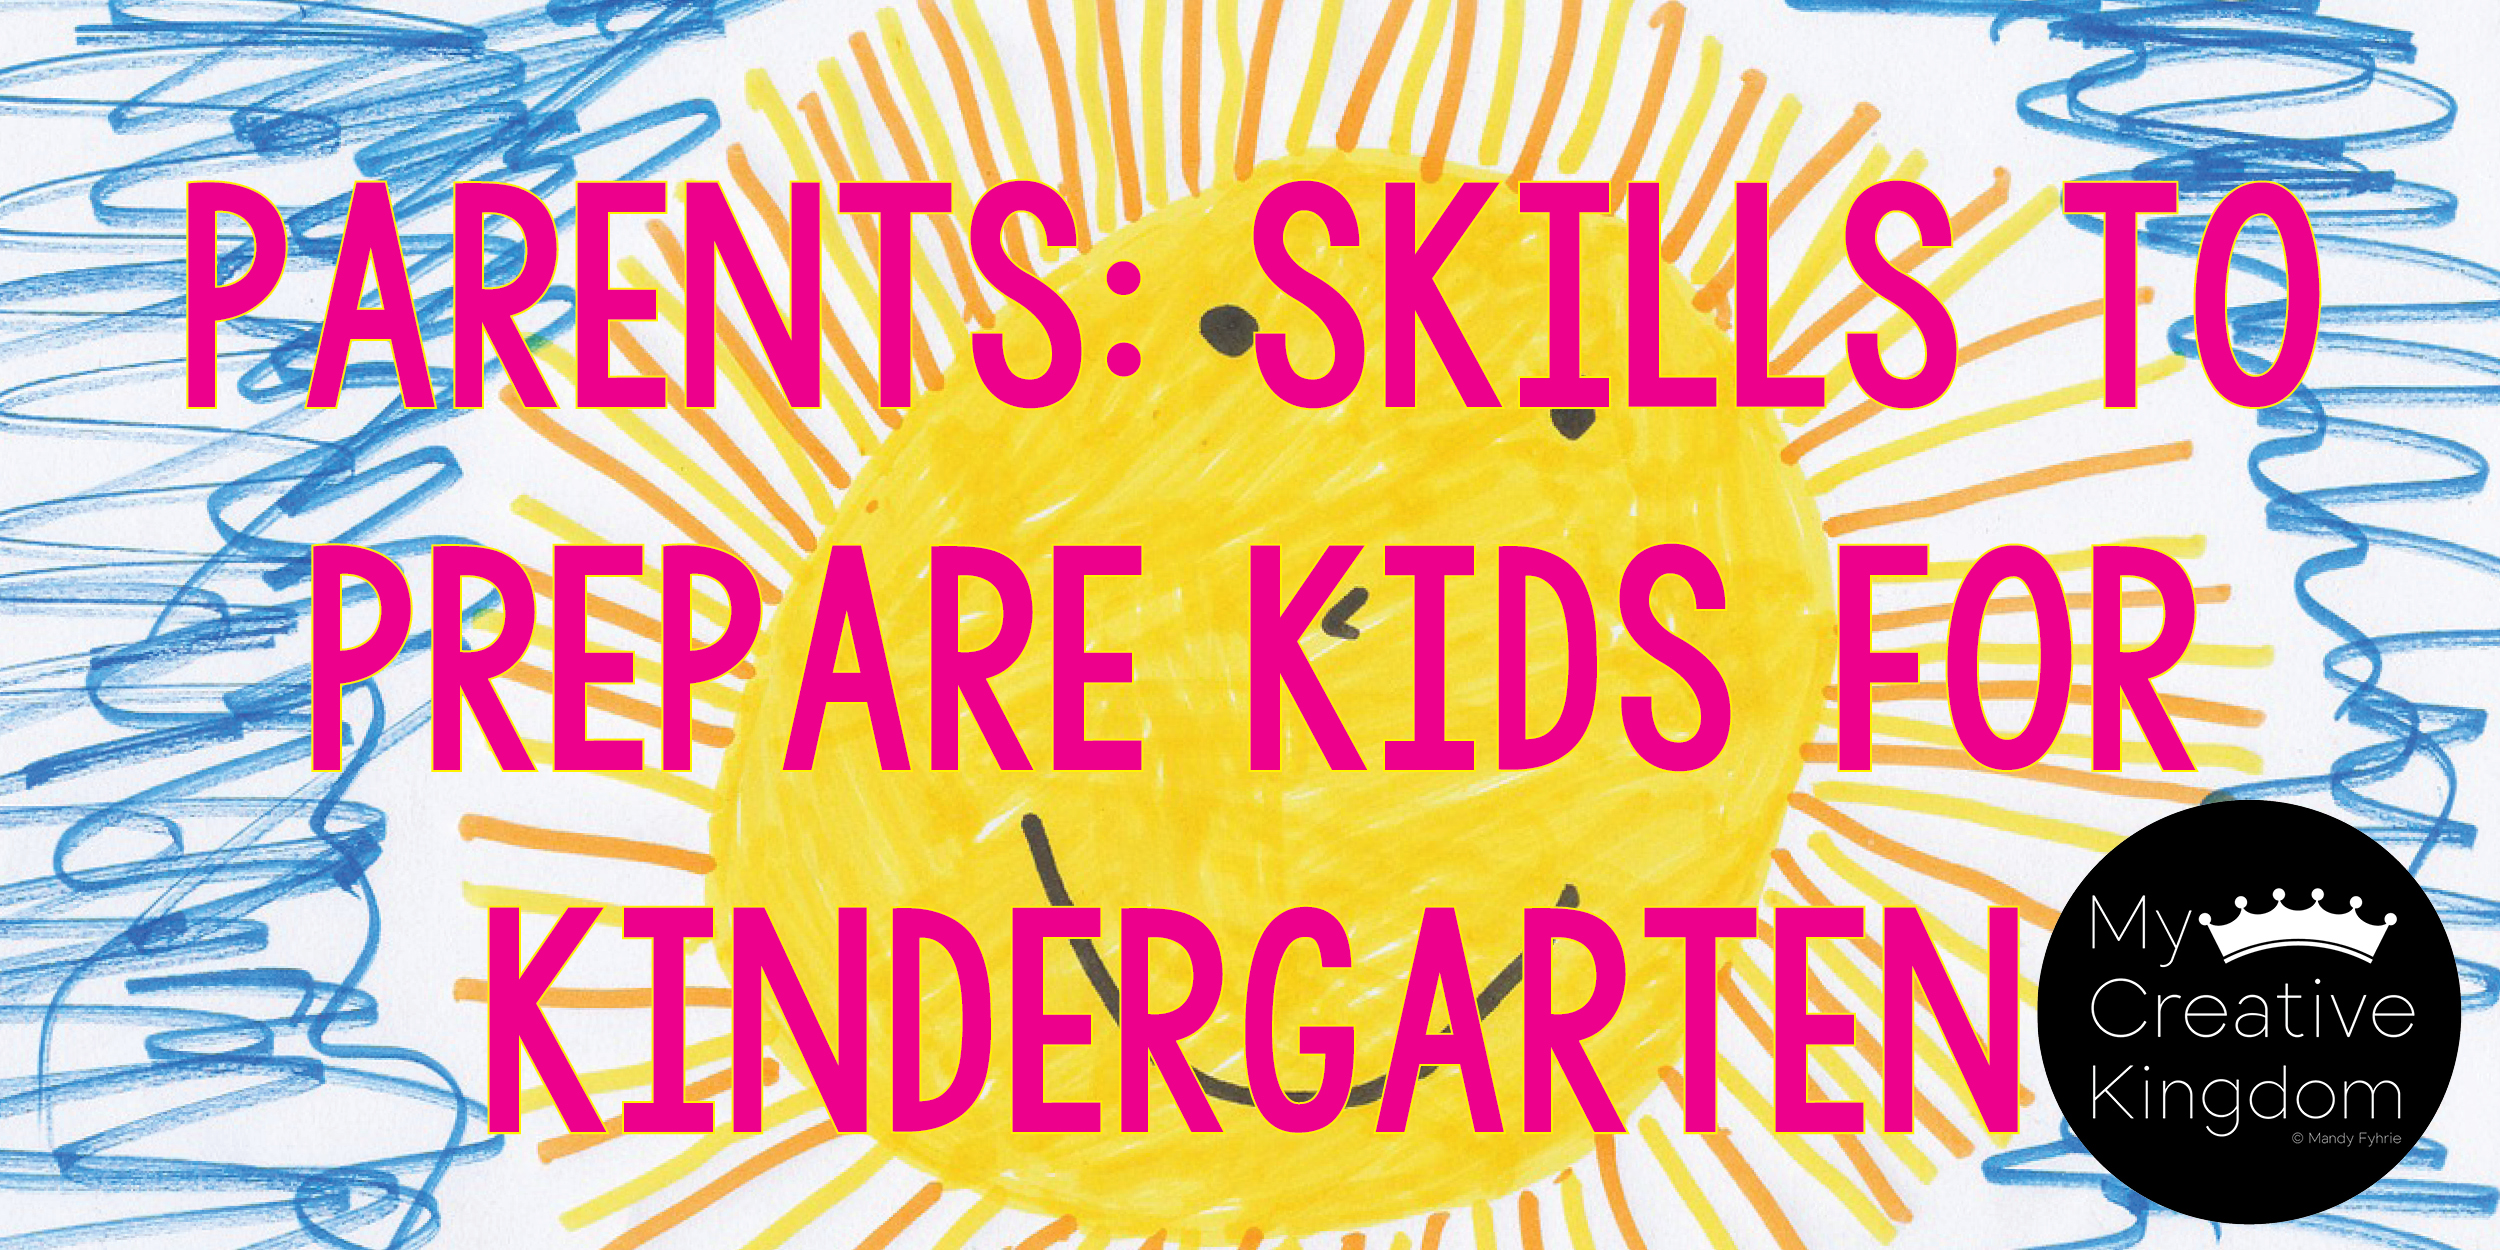 Parents: Skills to Prepare kids for Kindergarten PART 3